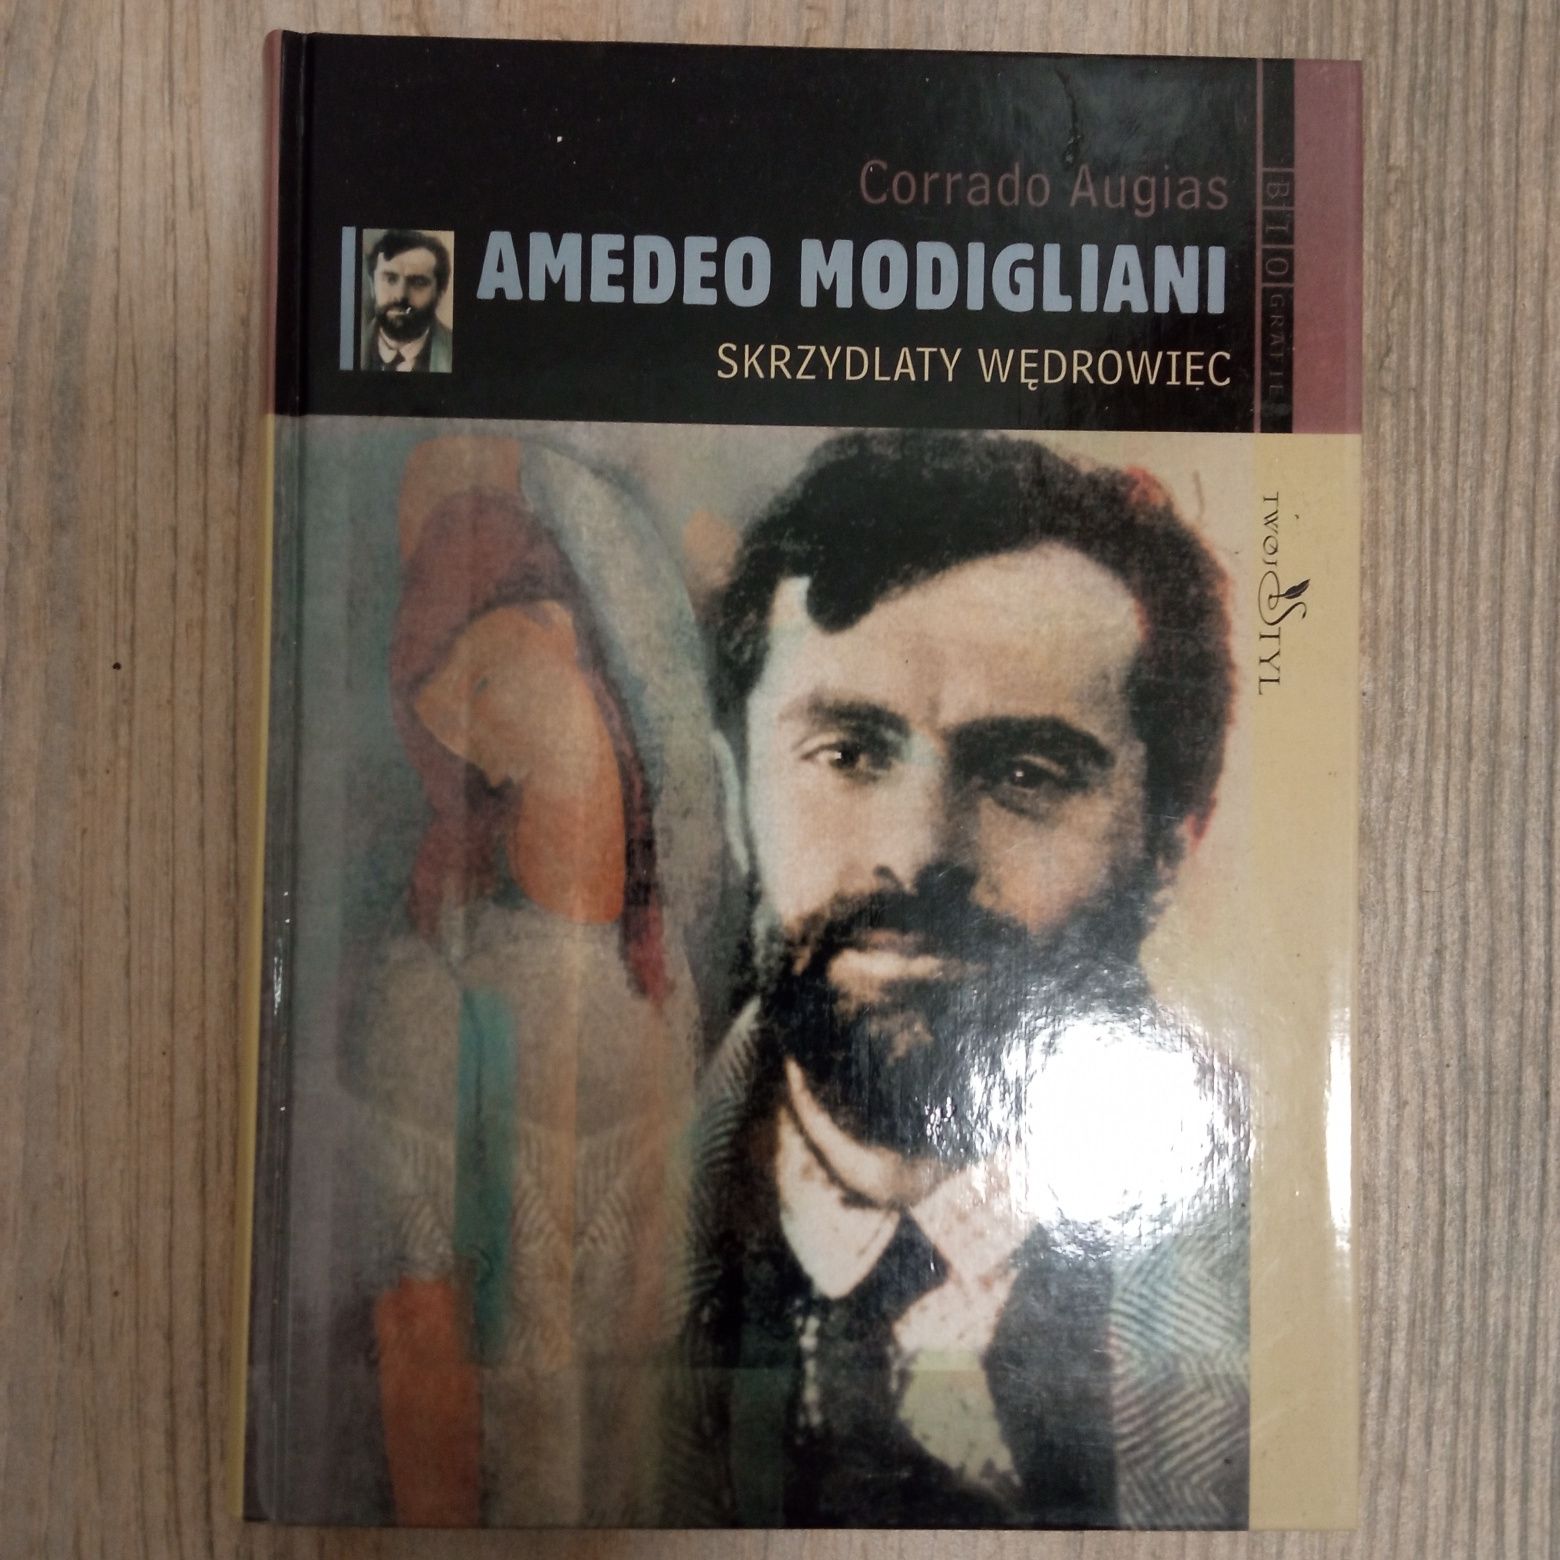 Corrado augias  Amadeo modigiliani